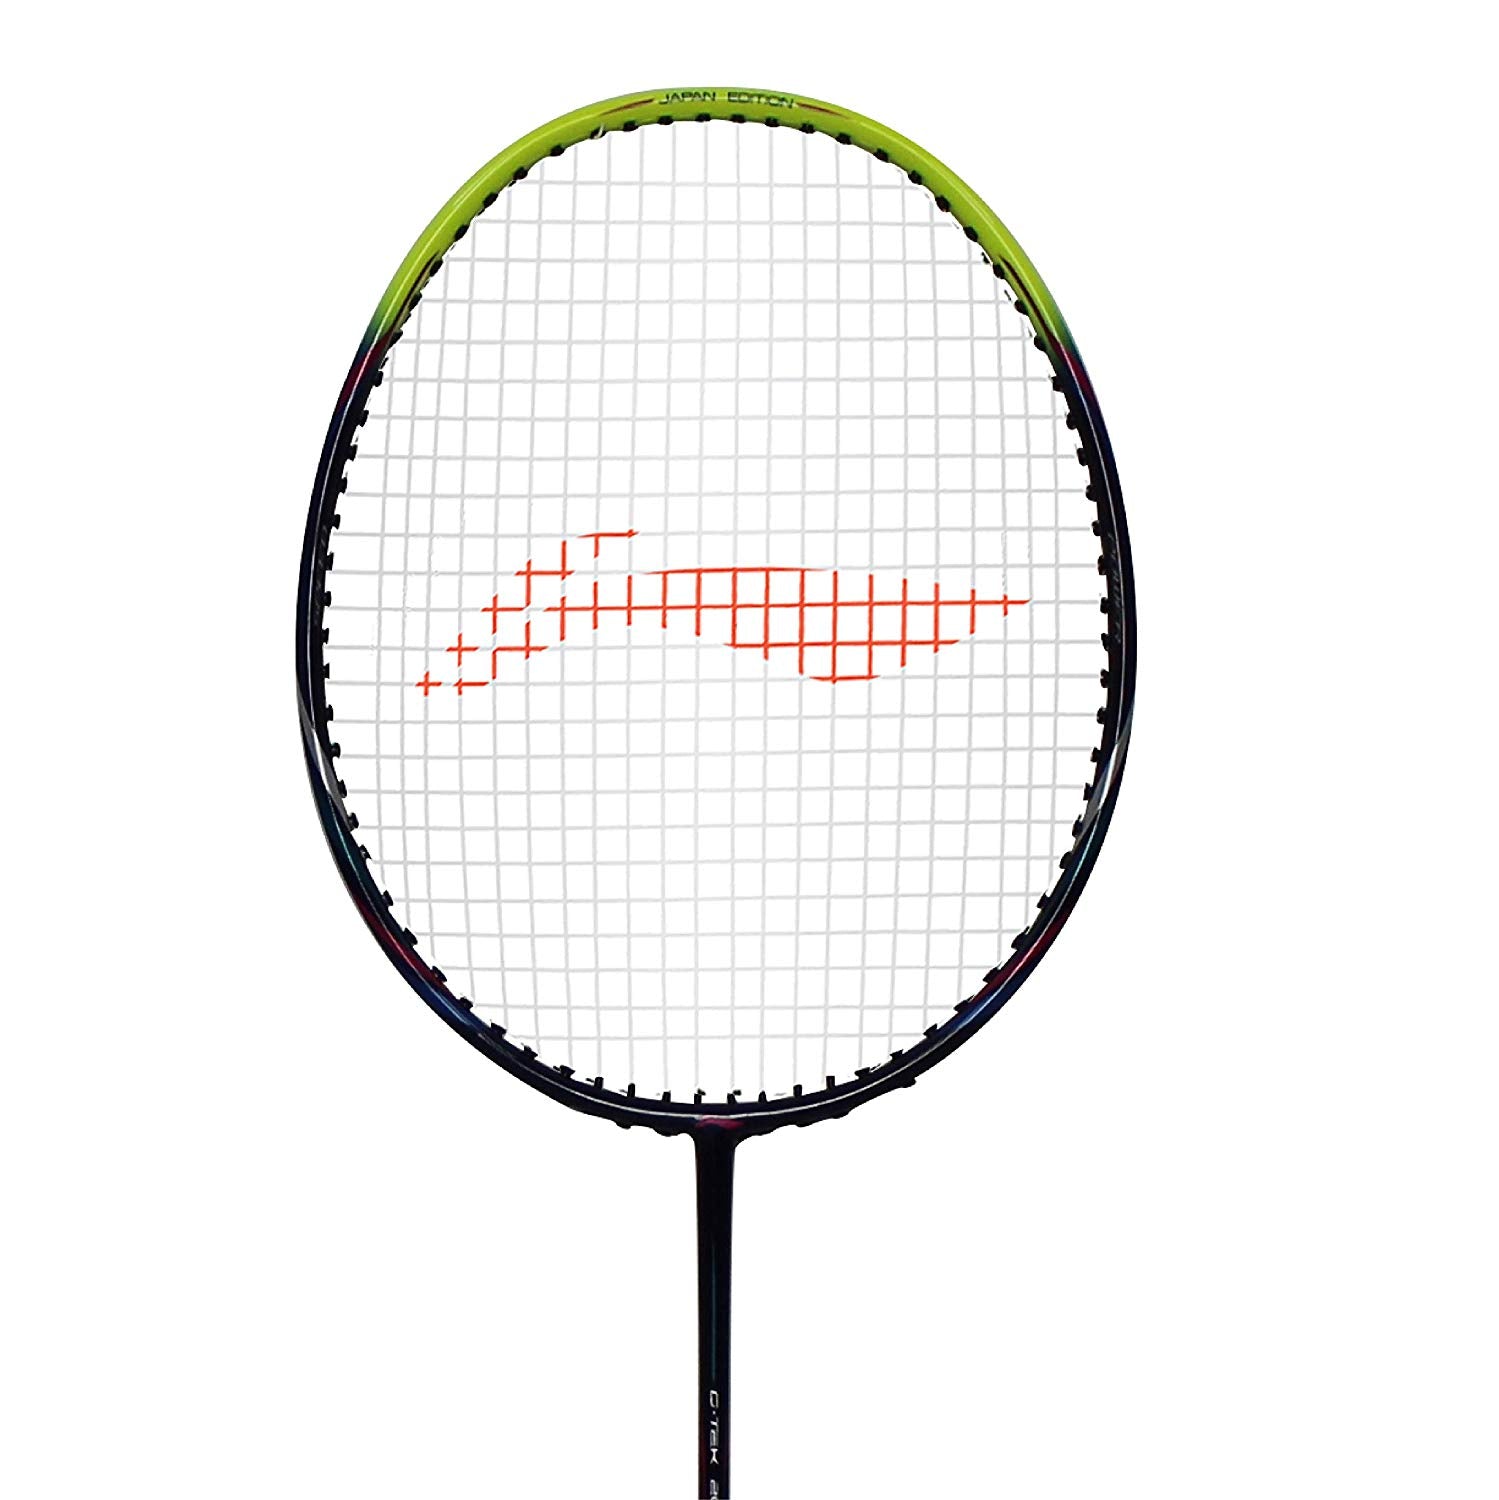 Li-Ning G-TEK 2020 (Strung) Badminton Racquets with Free Full Cover Blend, (Navy/Lime) - Best Price online Prokicksports.com